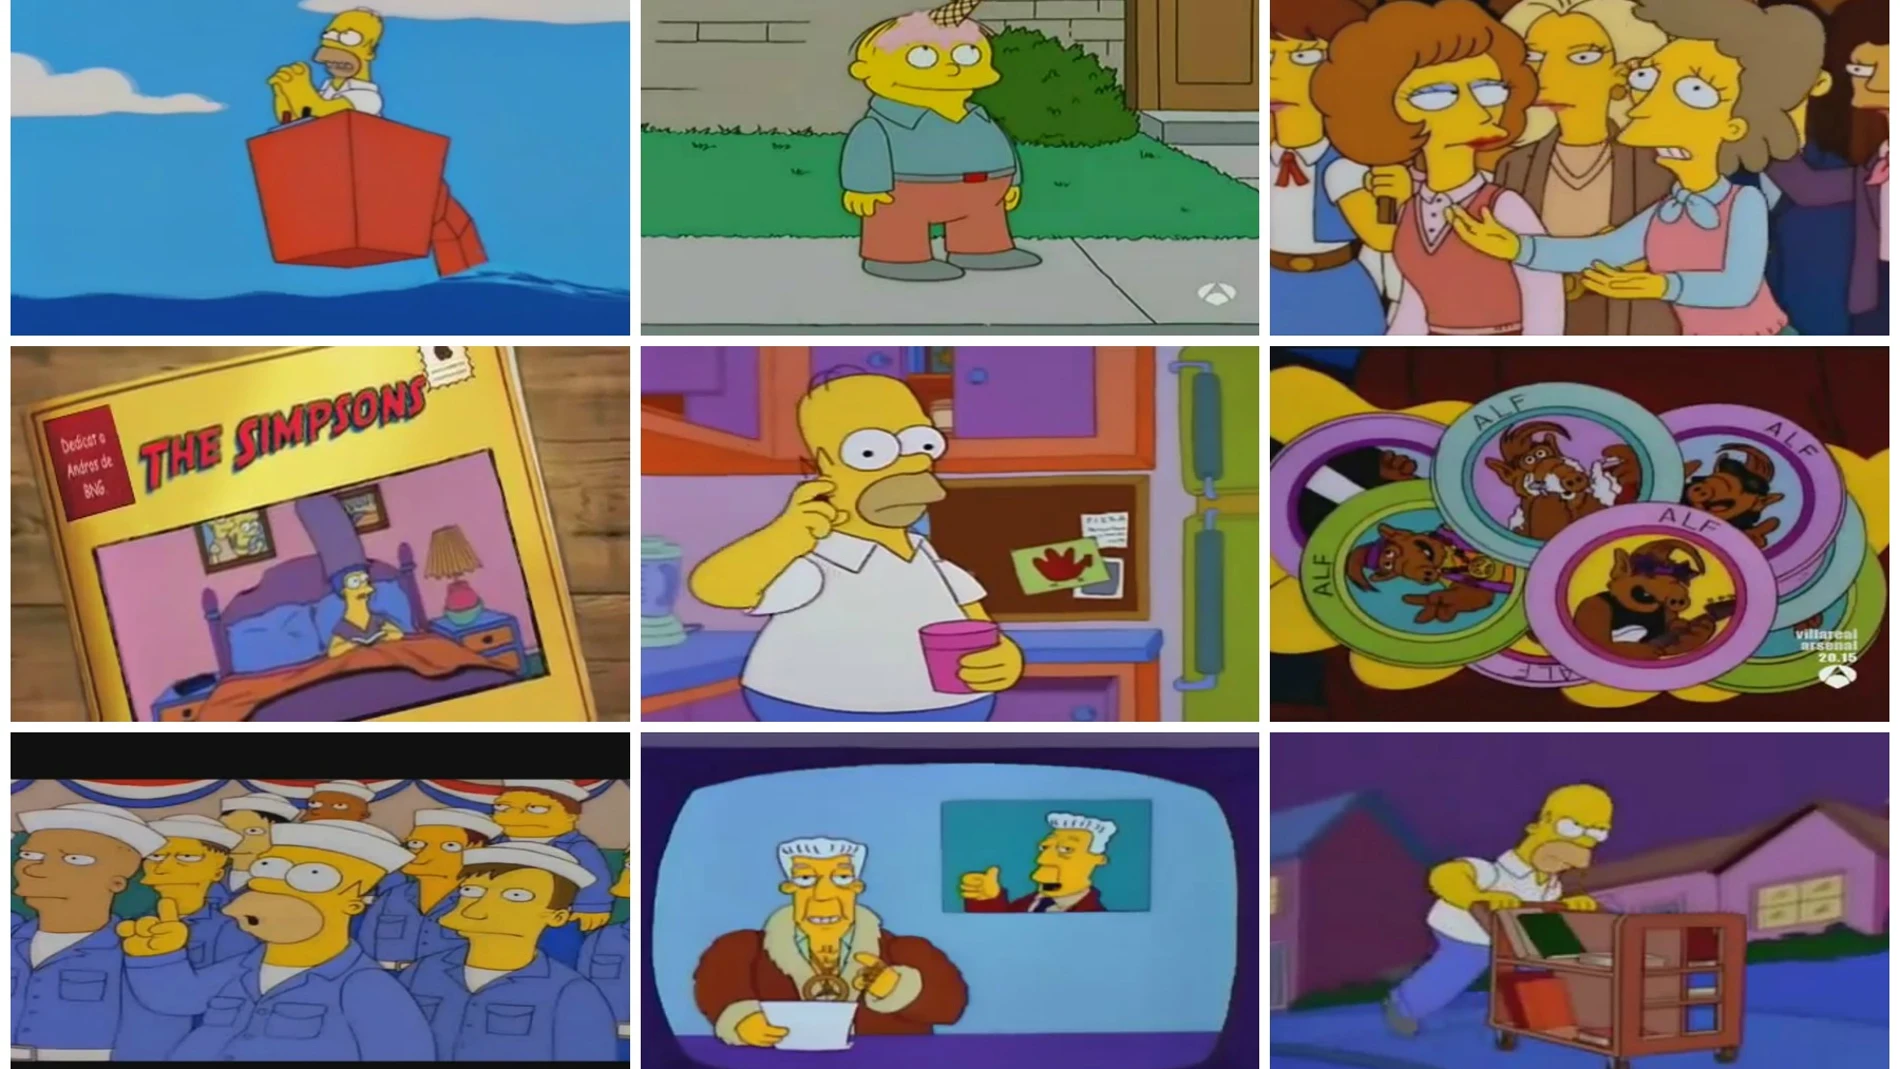 Montaje Ranking los Simpson